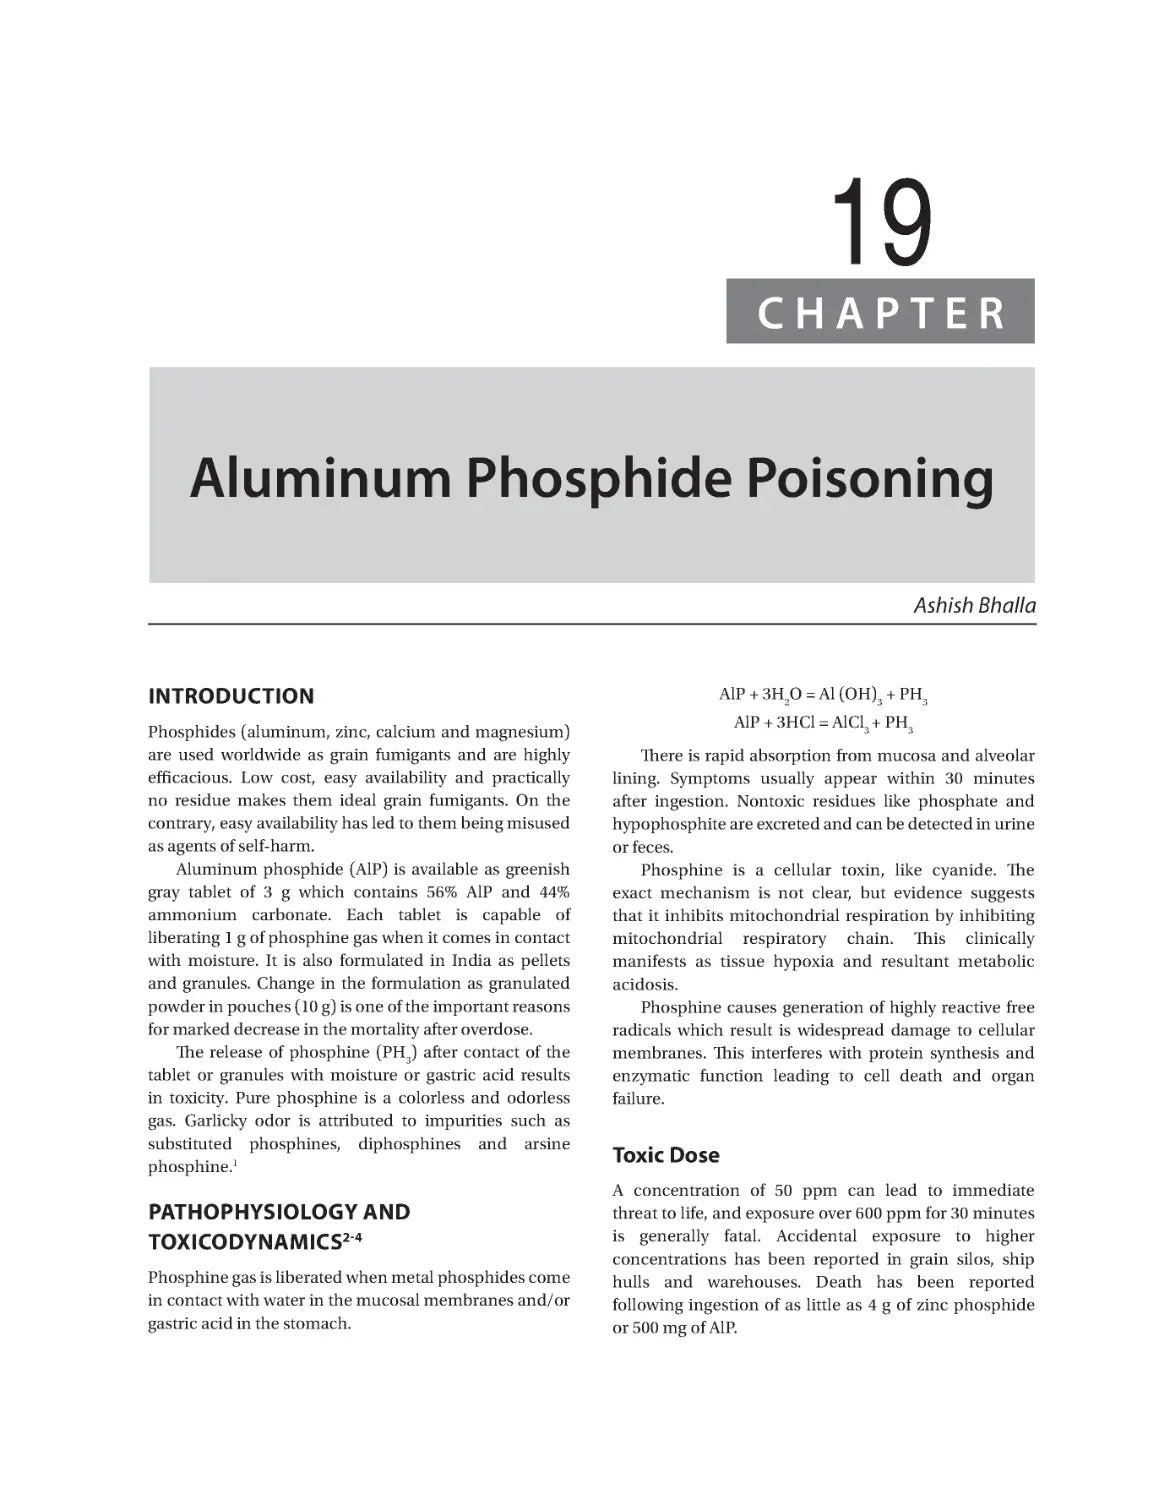 Chapter 19: Aluminum Phosphide Poisoning